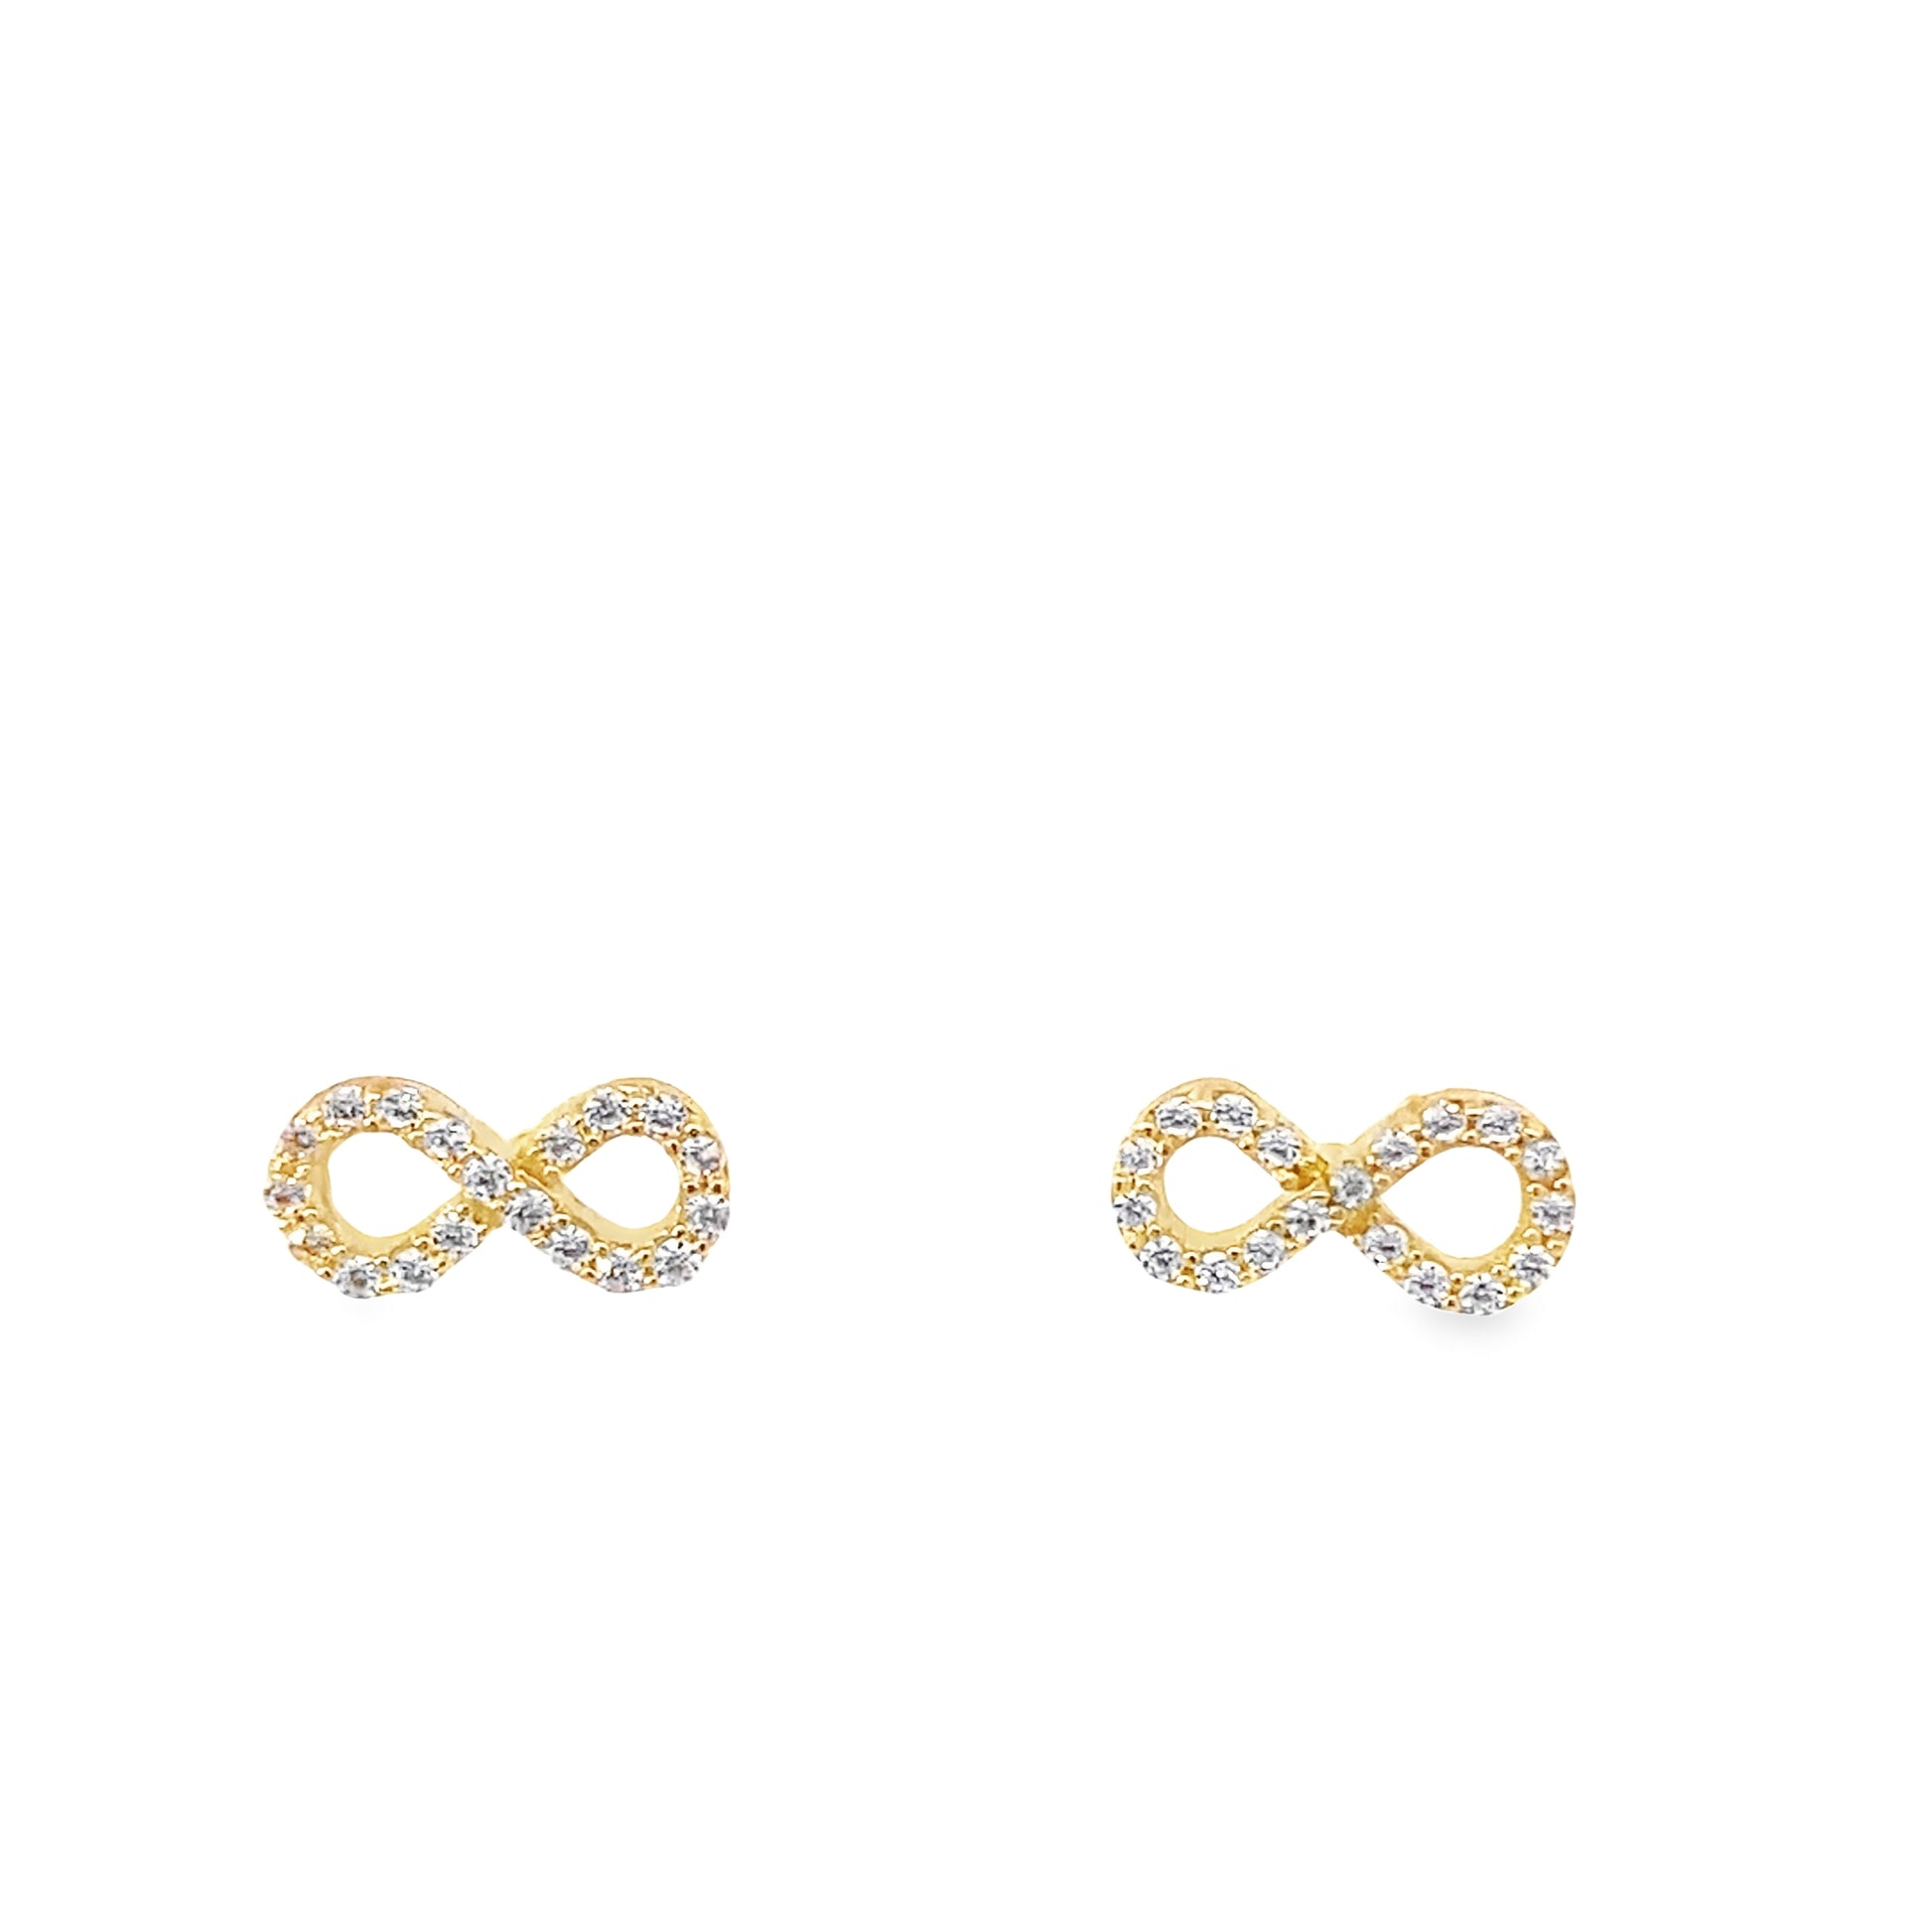 14K Yellow Gold Cz Infinity Stud Earrings